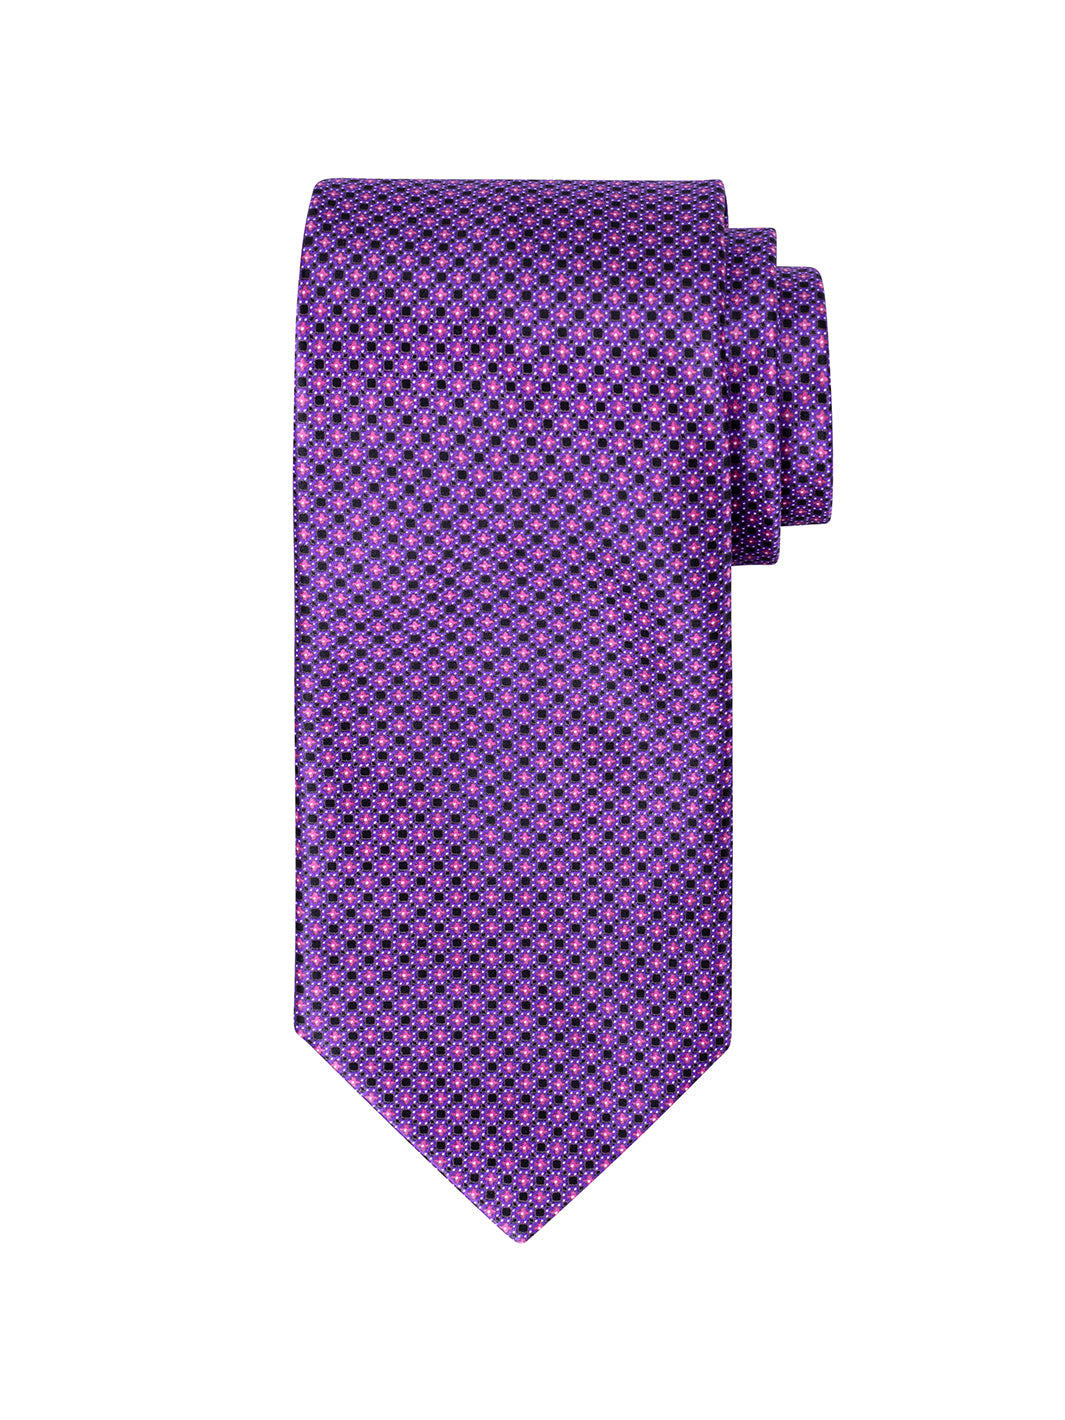 Men's Stefano Ricci Tie - Purple and Pink